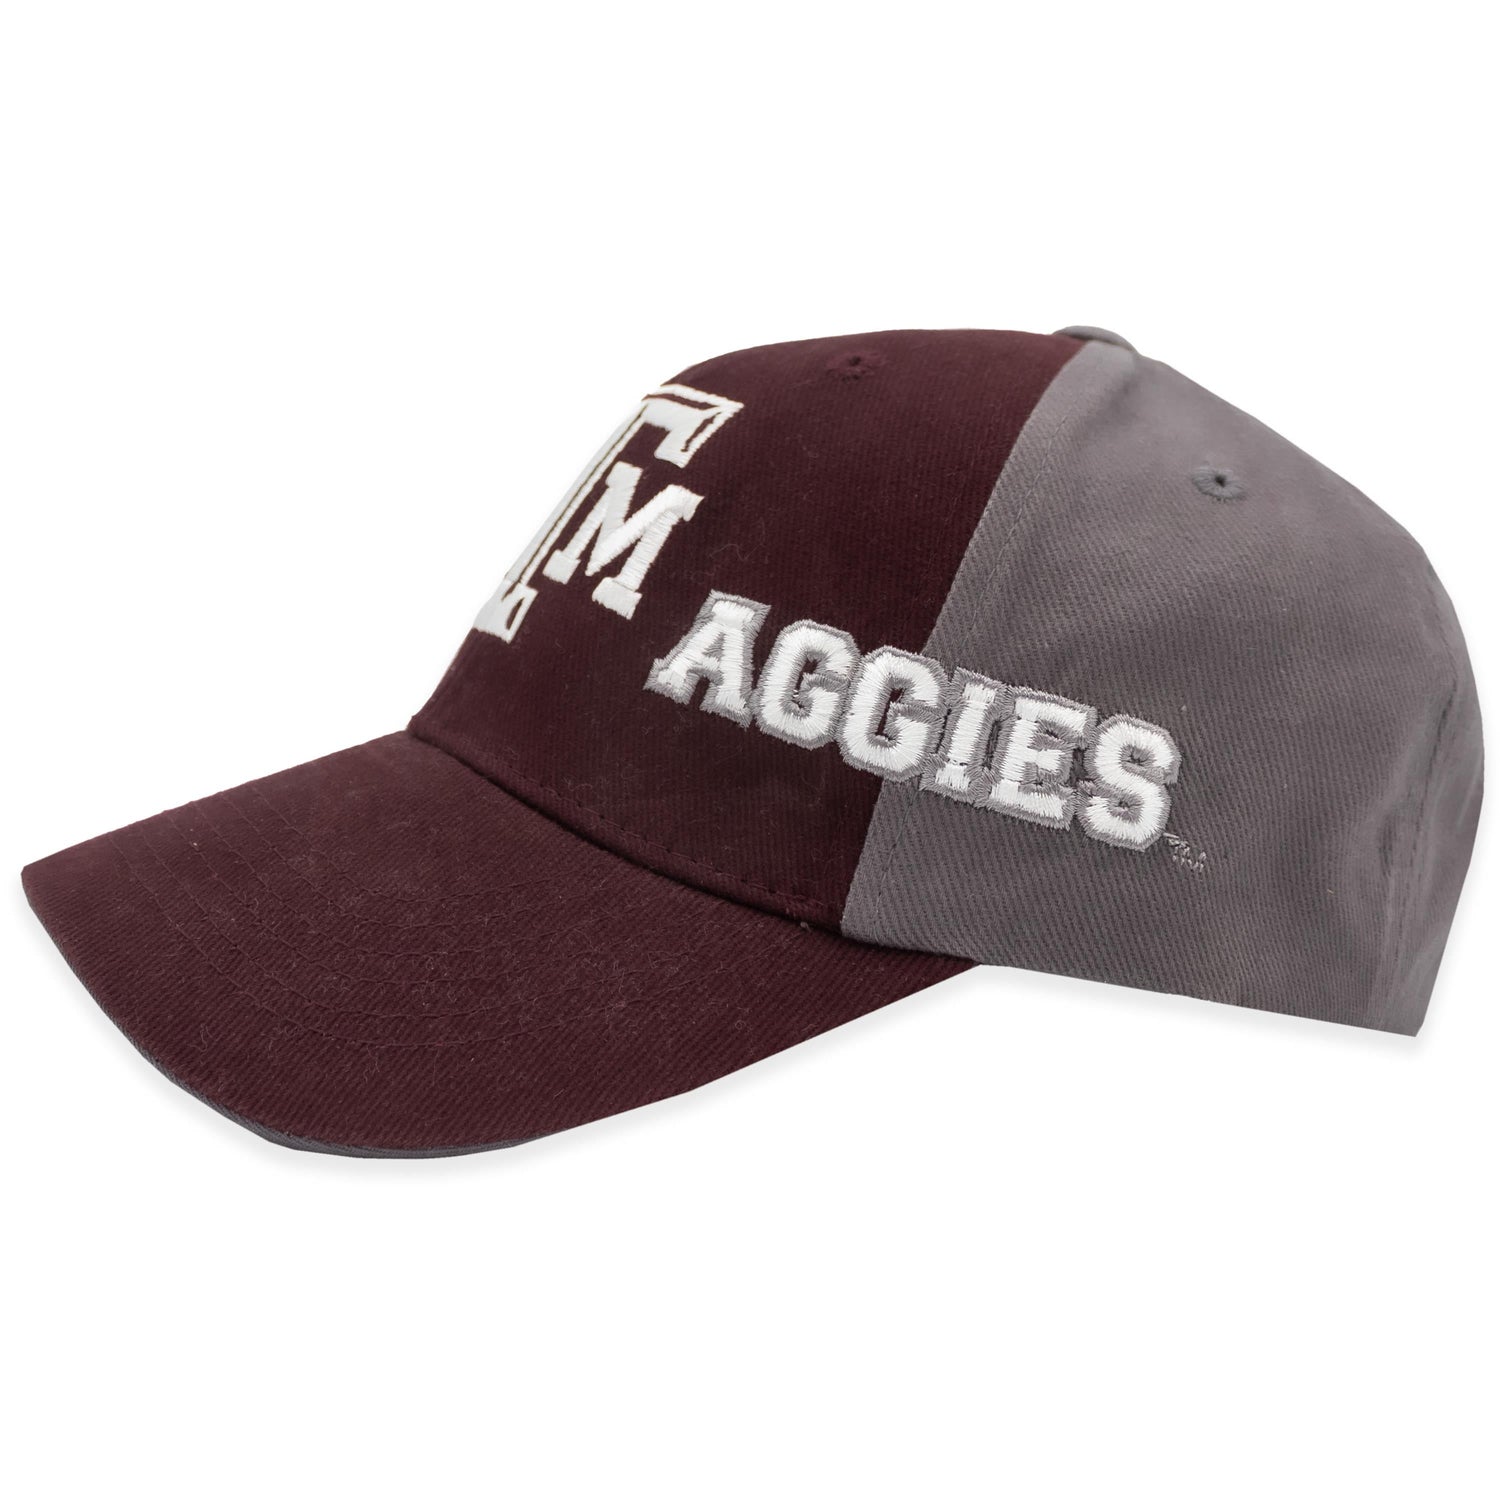 Texas A&M Side Aggies Hat